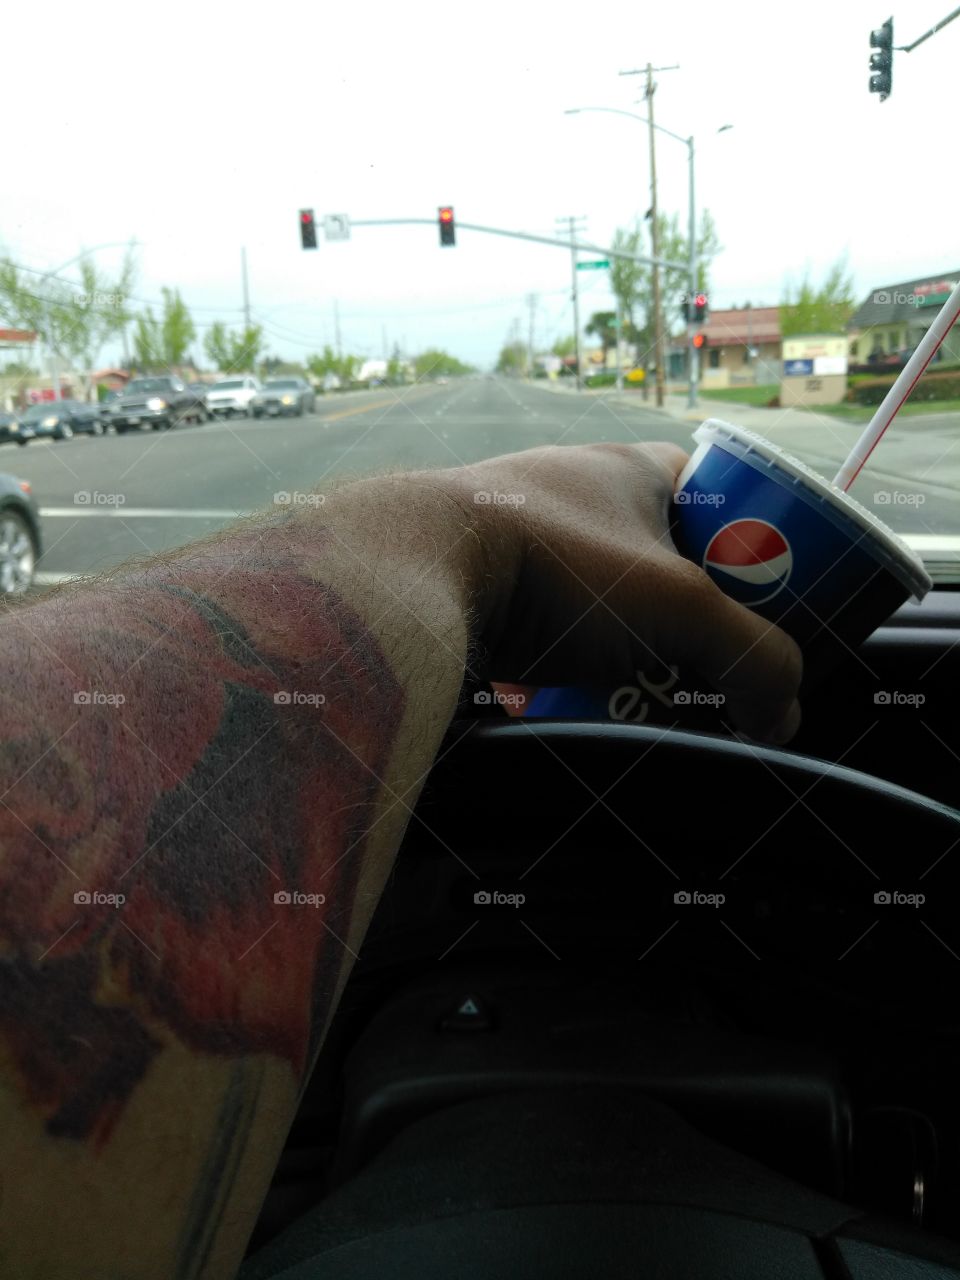 Pepsi on the road